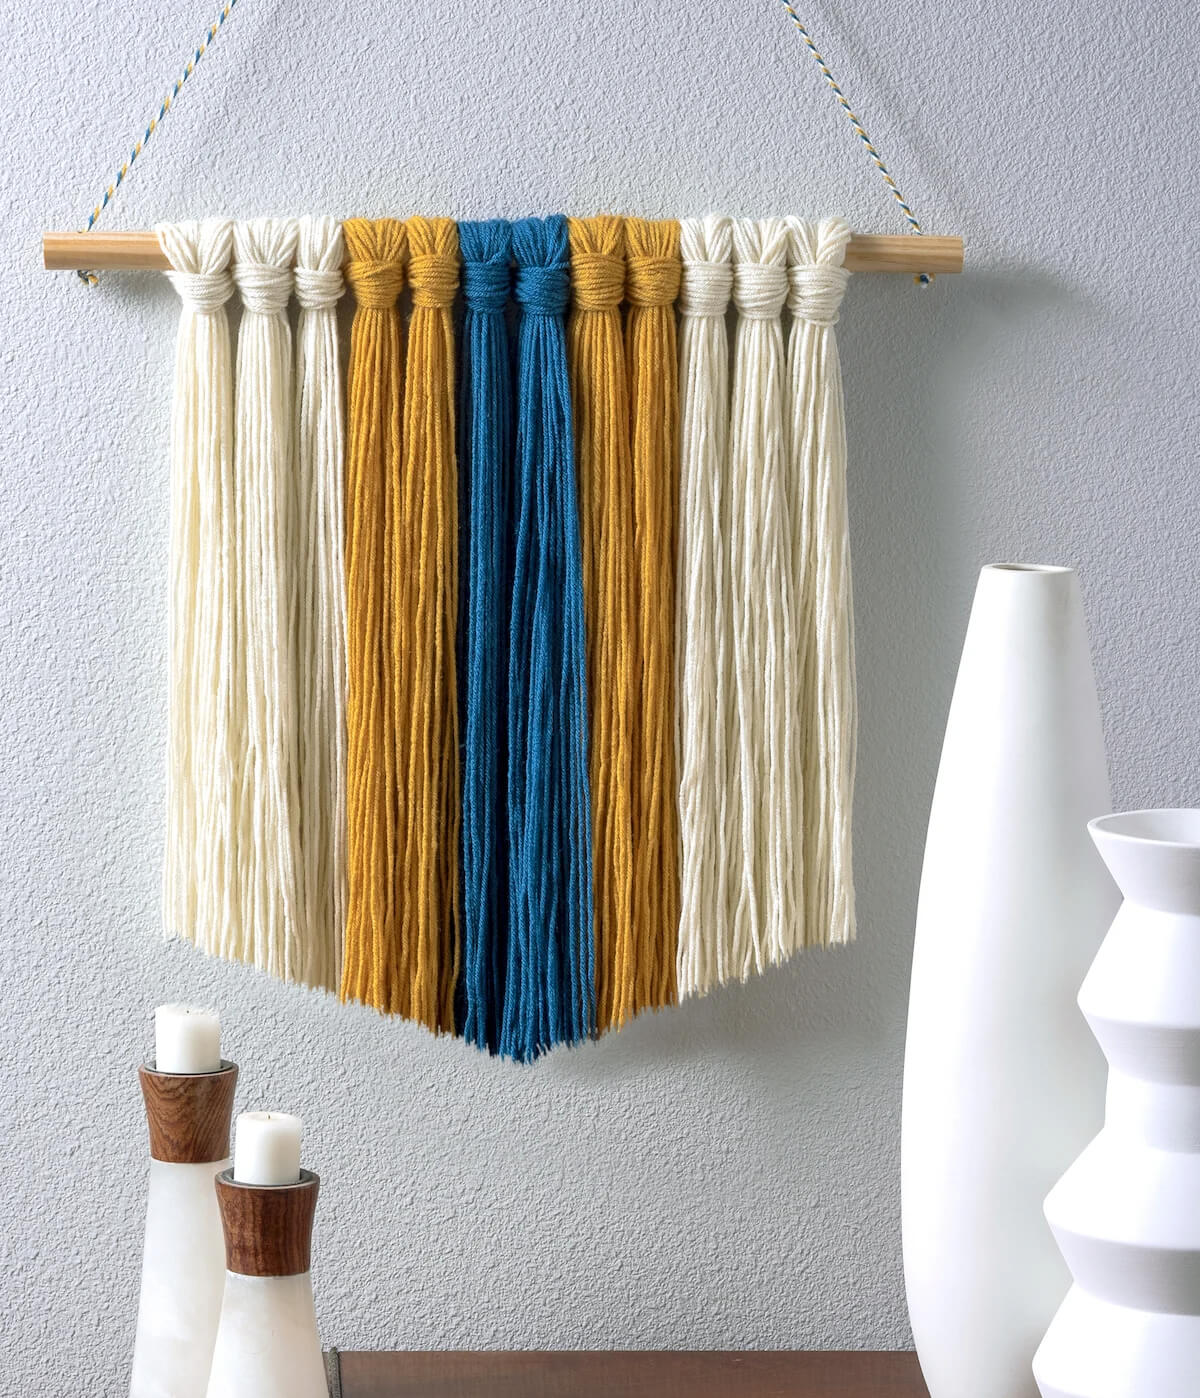 Make A Beautiful Yarn Wall Hanging Crafted Without Knitting Crafts to make with yarn without knitting